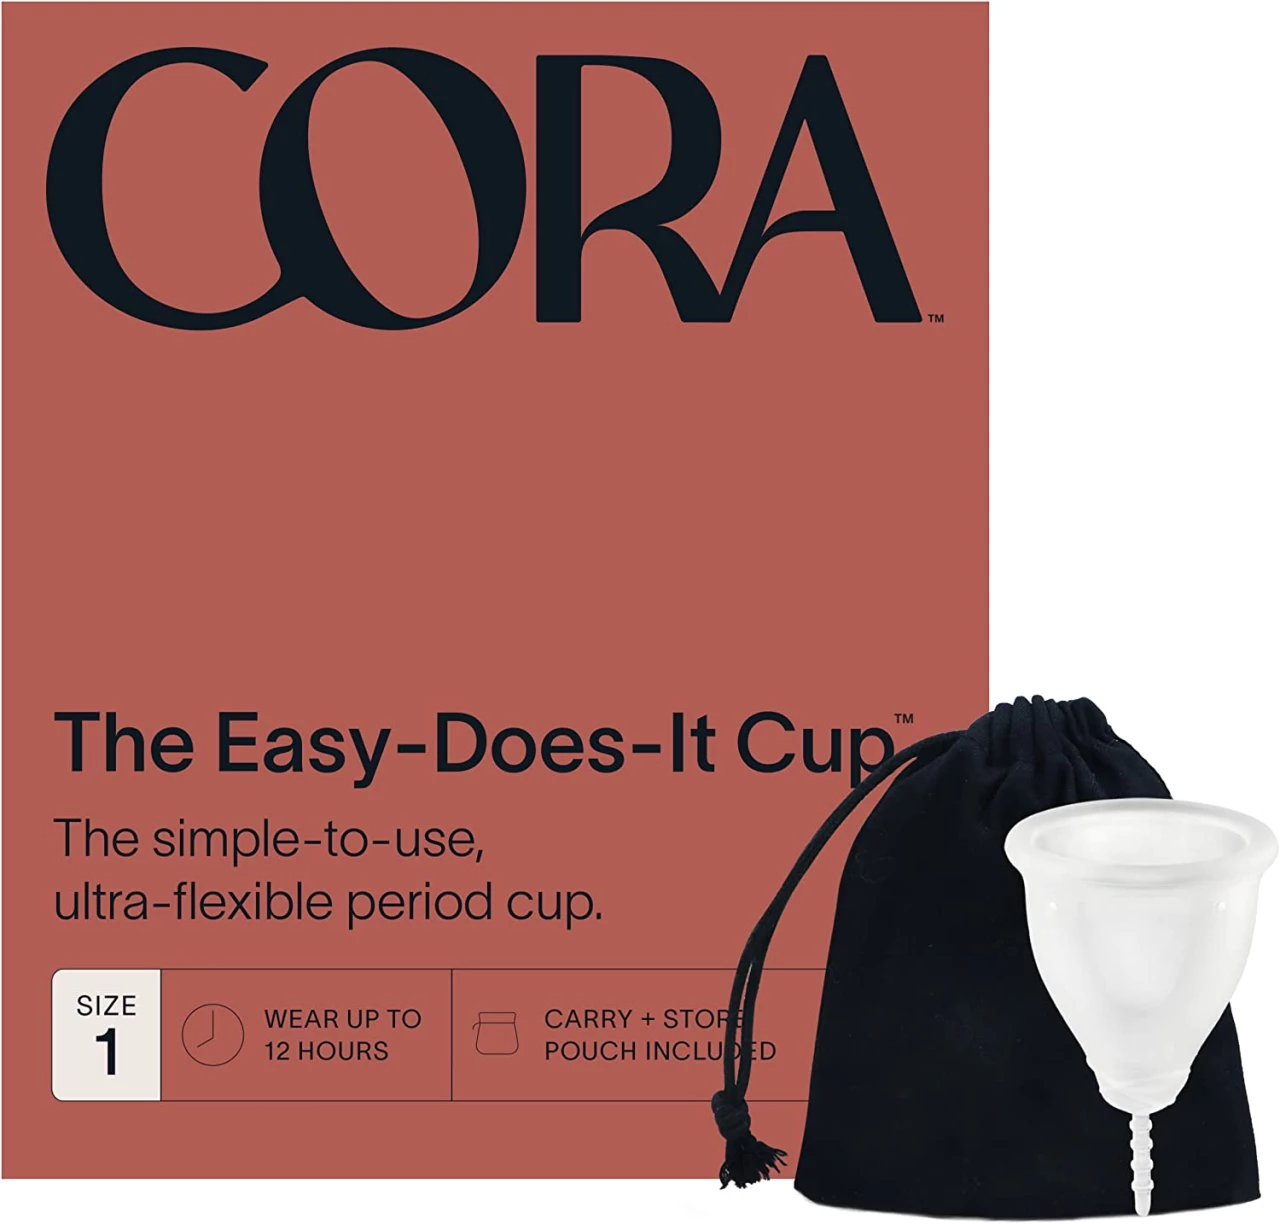 Cora - Copa menstrual, 1 US